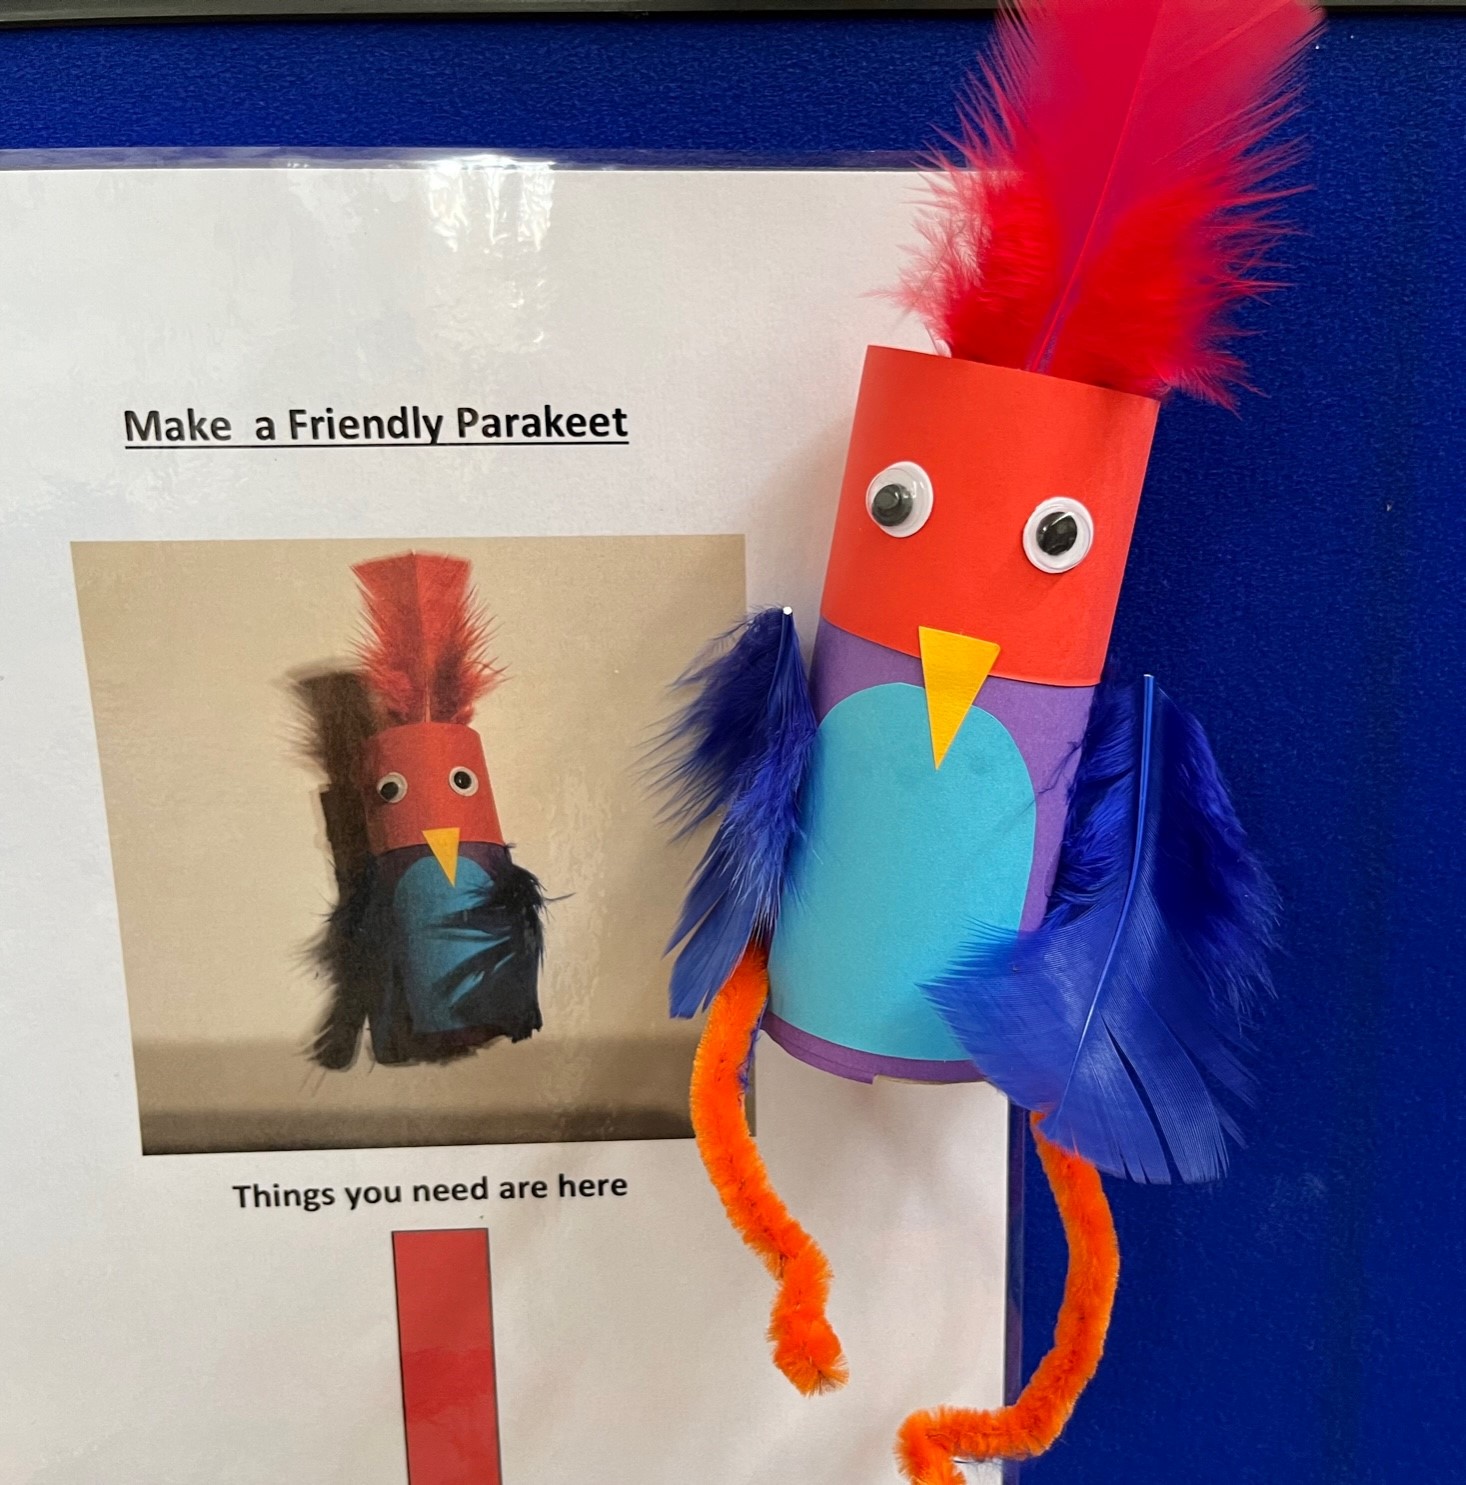 Zoo-themed crafts this week! Parakeet